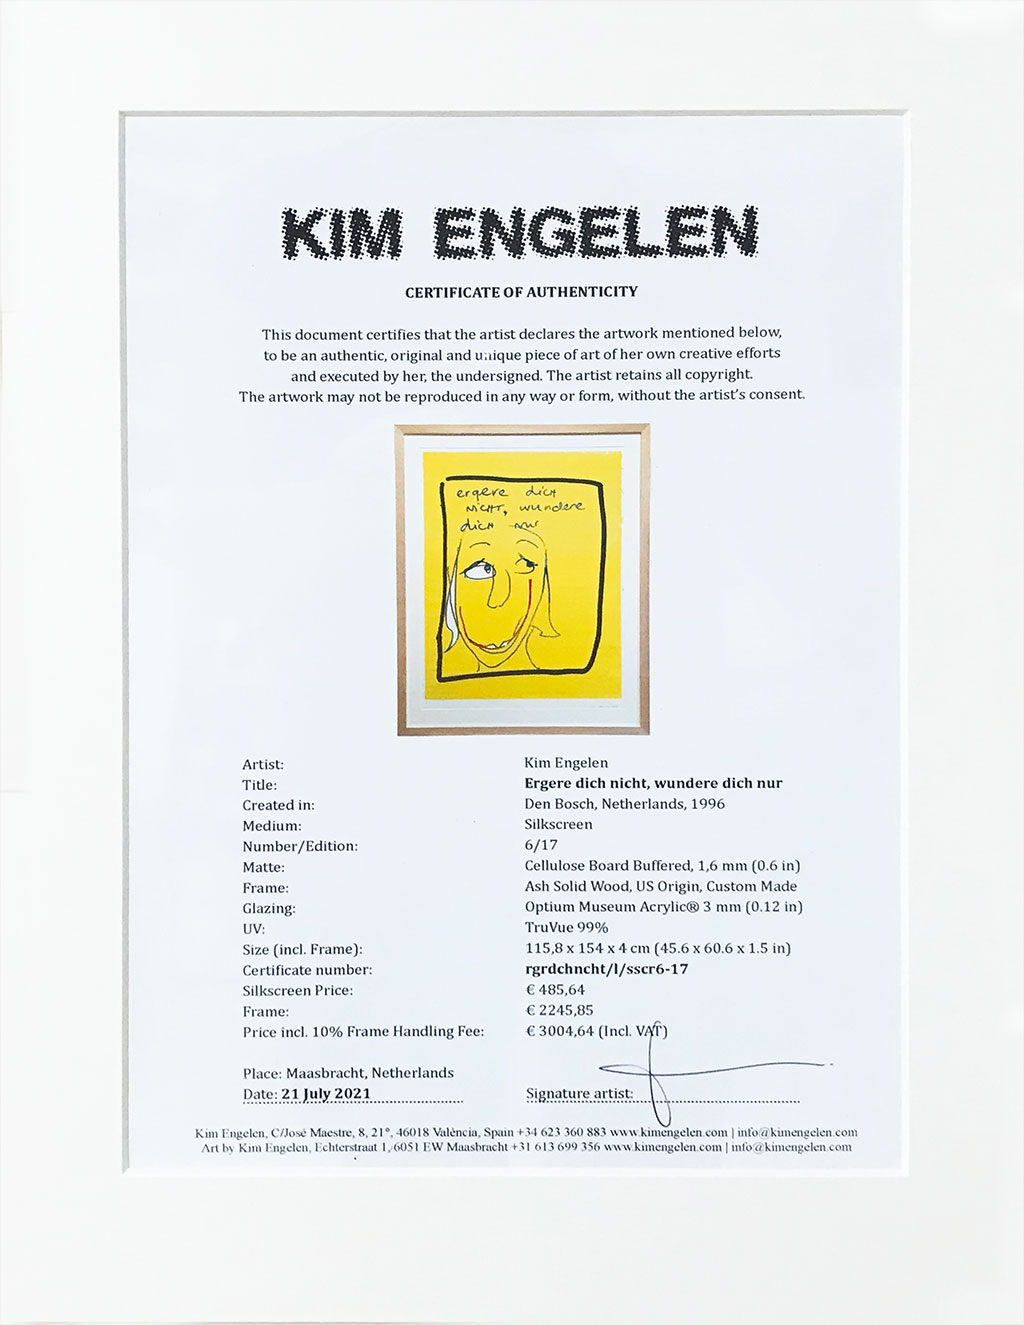 Kim Engelen, Ergere dicht nicht, wundere dich nur, Framed Silkscreen No.6, Edition 17, Certificate of Authenticity, 1996